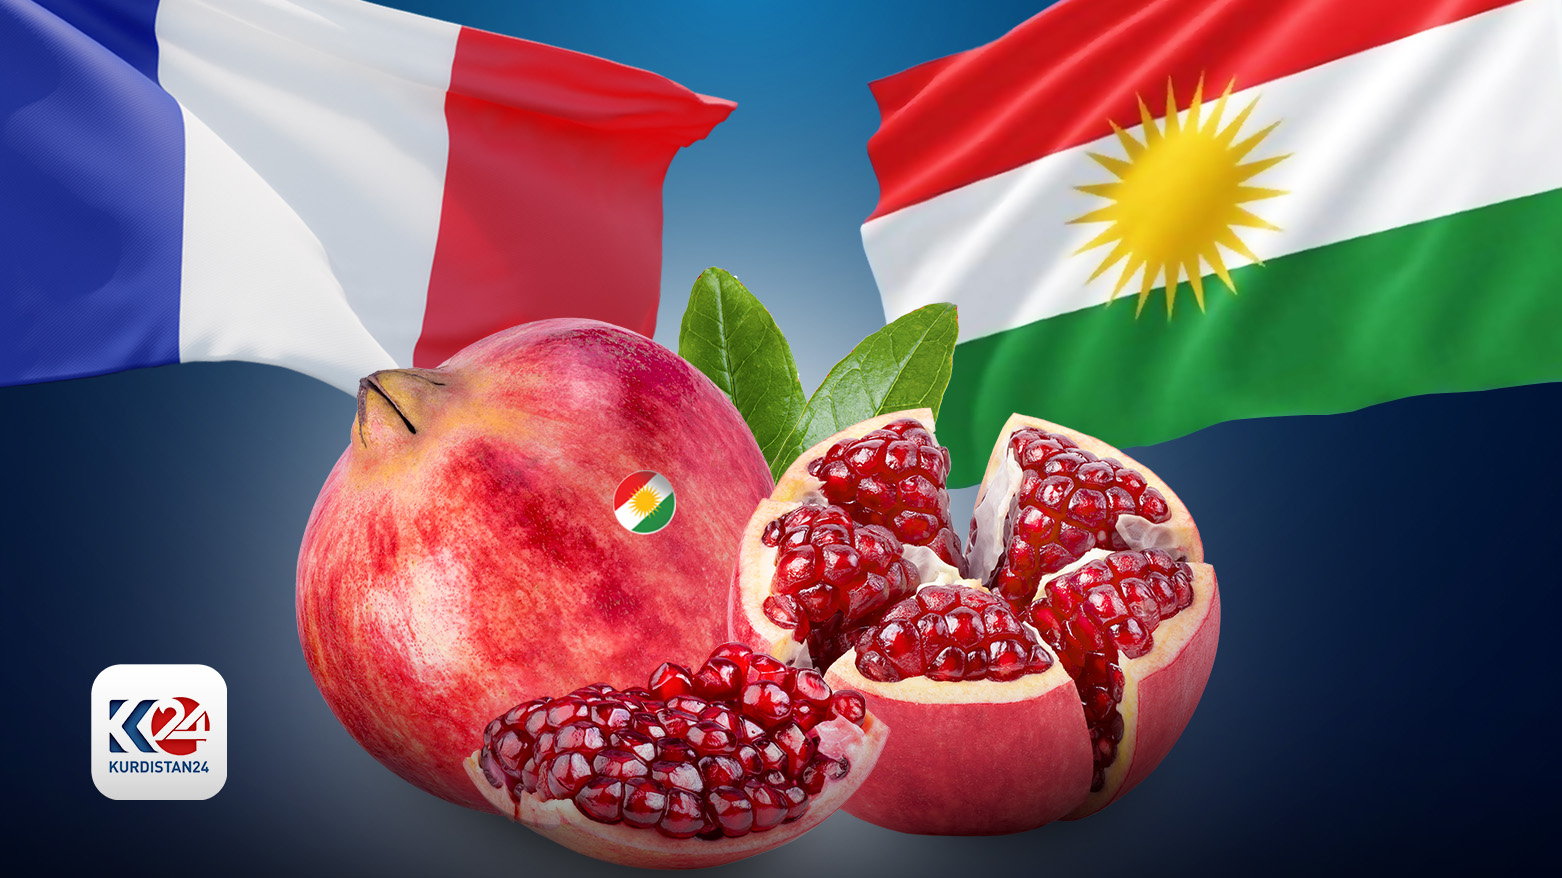 Kurdish pomegranates are known for their premium quality. (Photo: Designed by Kurdistan 24)